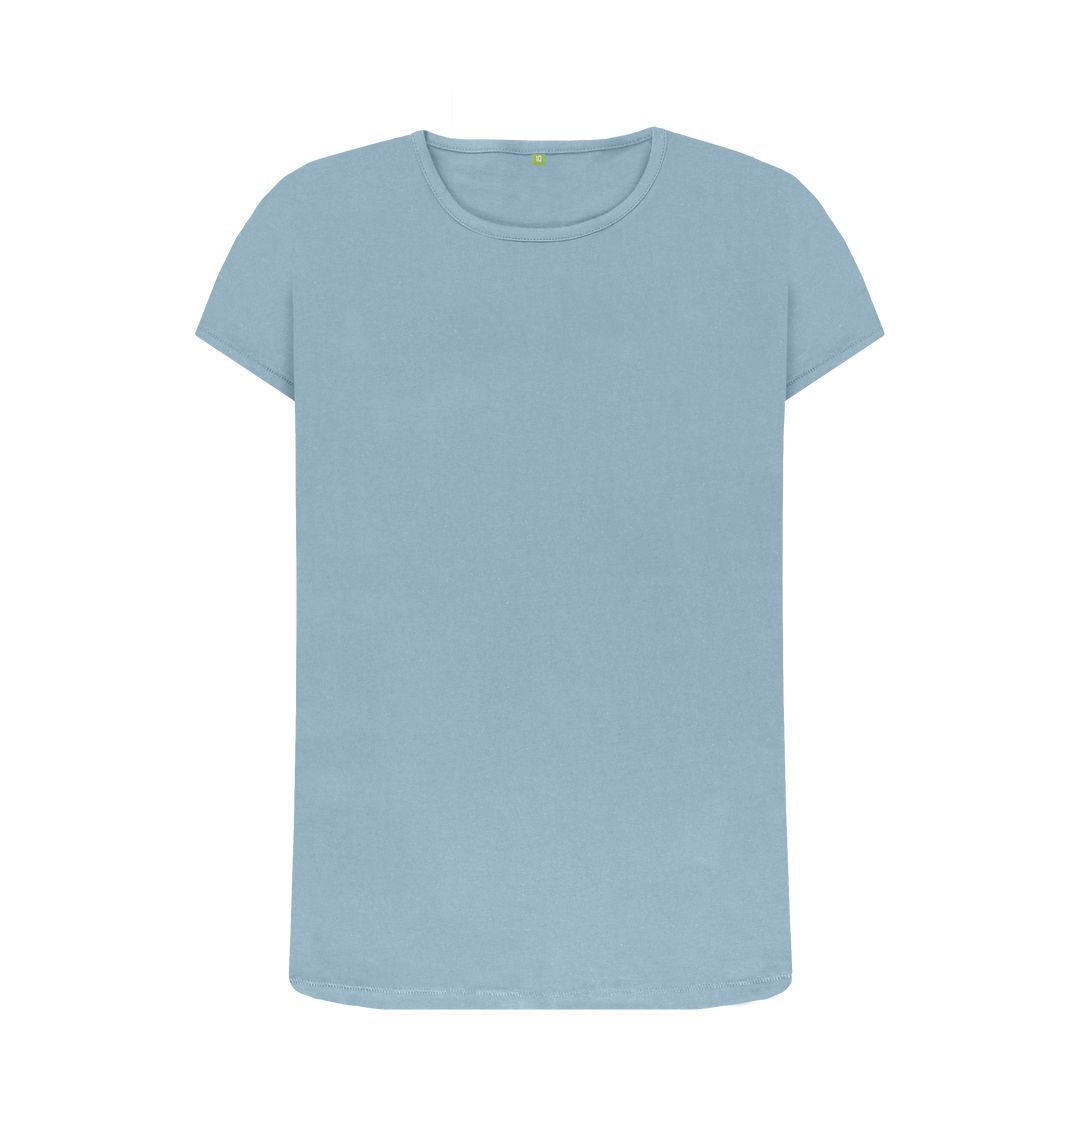 Stone Blue Women's organic cotton crew neck t-shirt